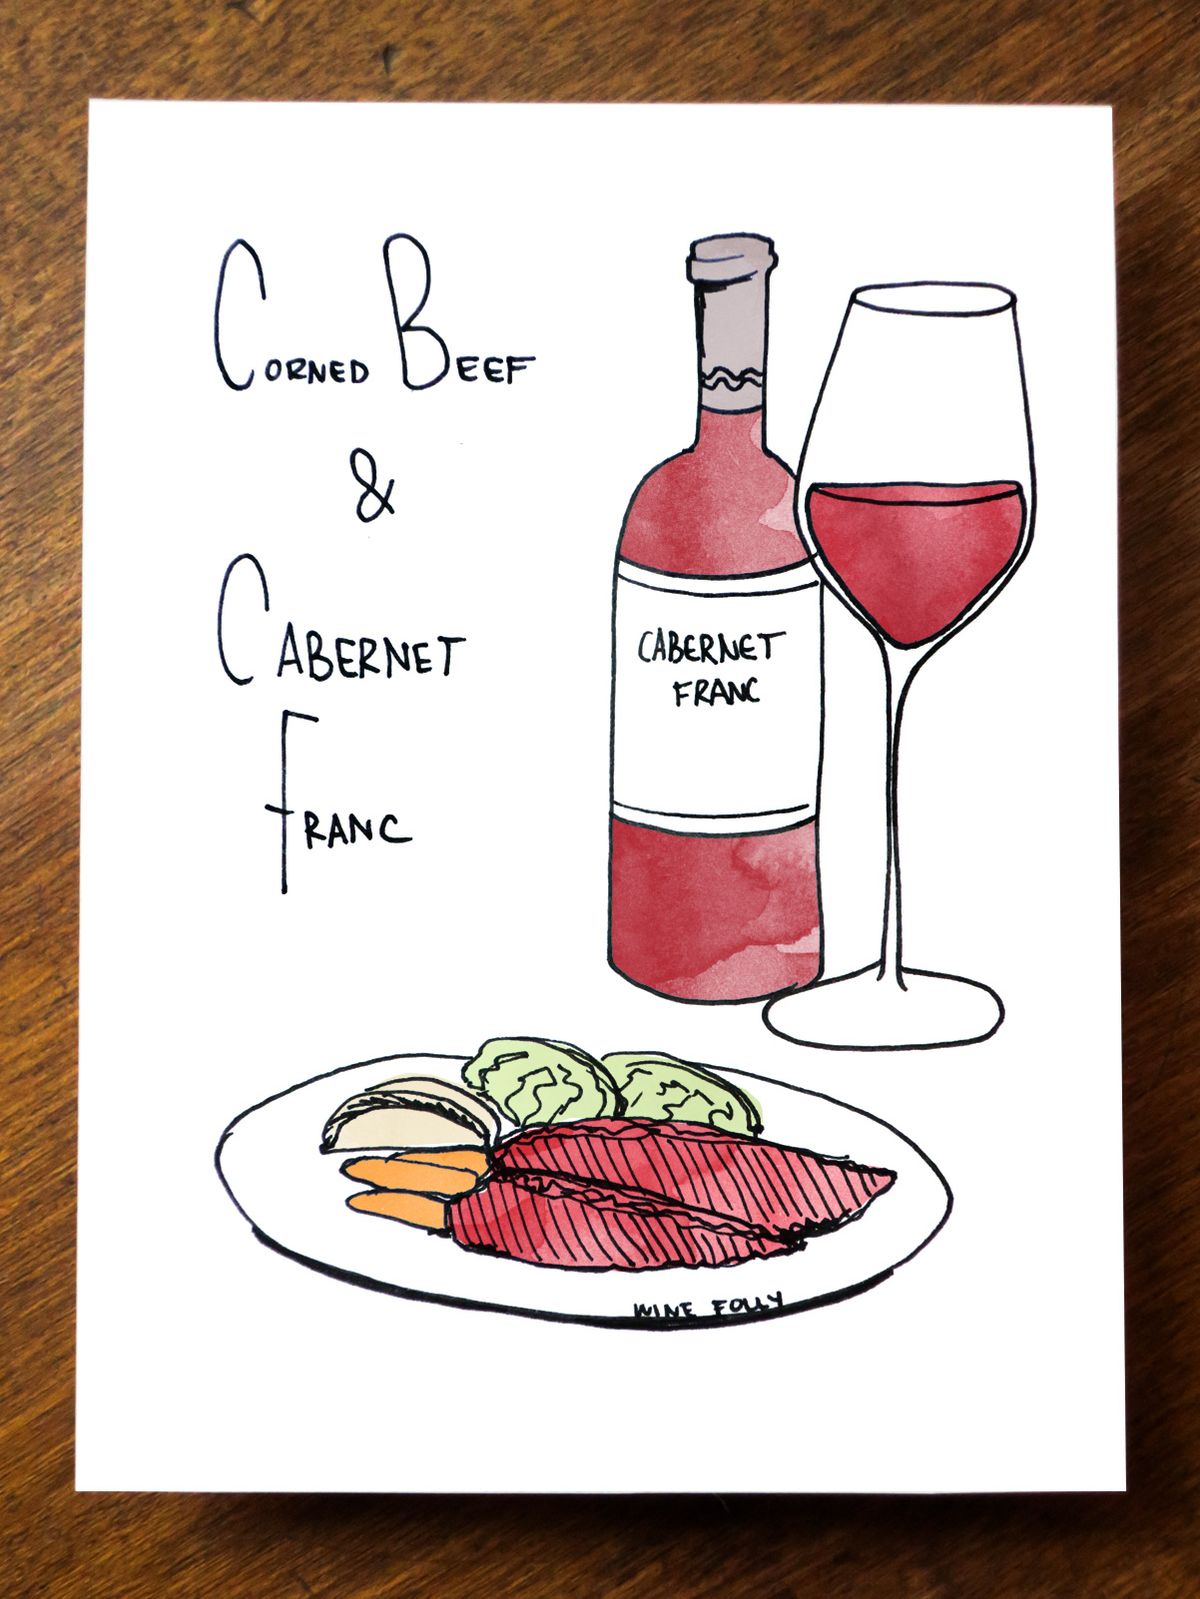 corned-beef-wine-pairing-cabernet-franc